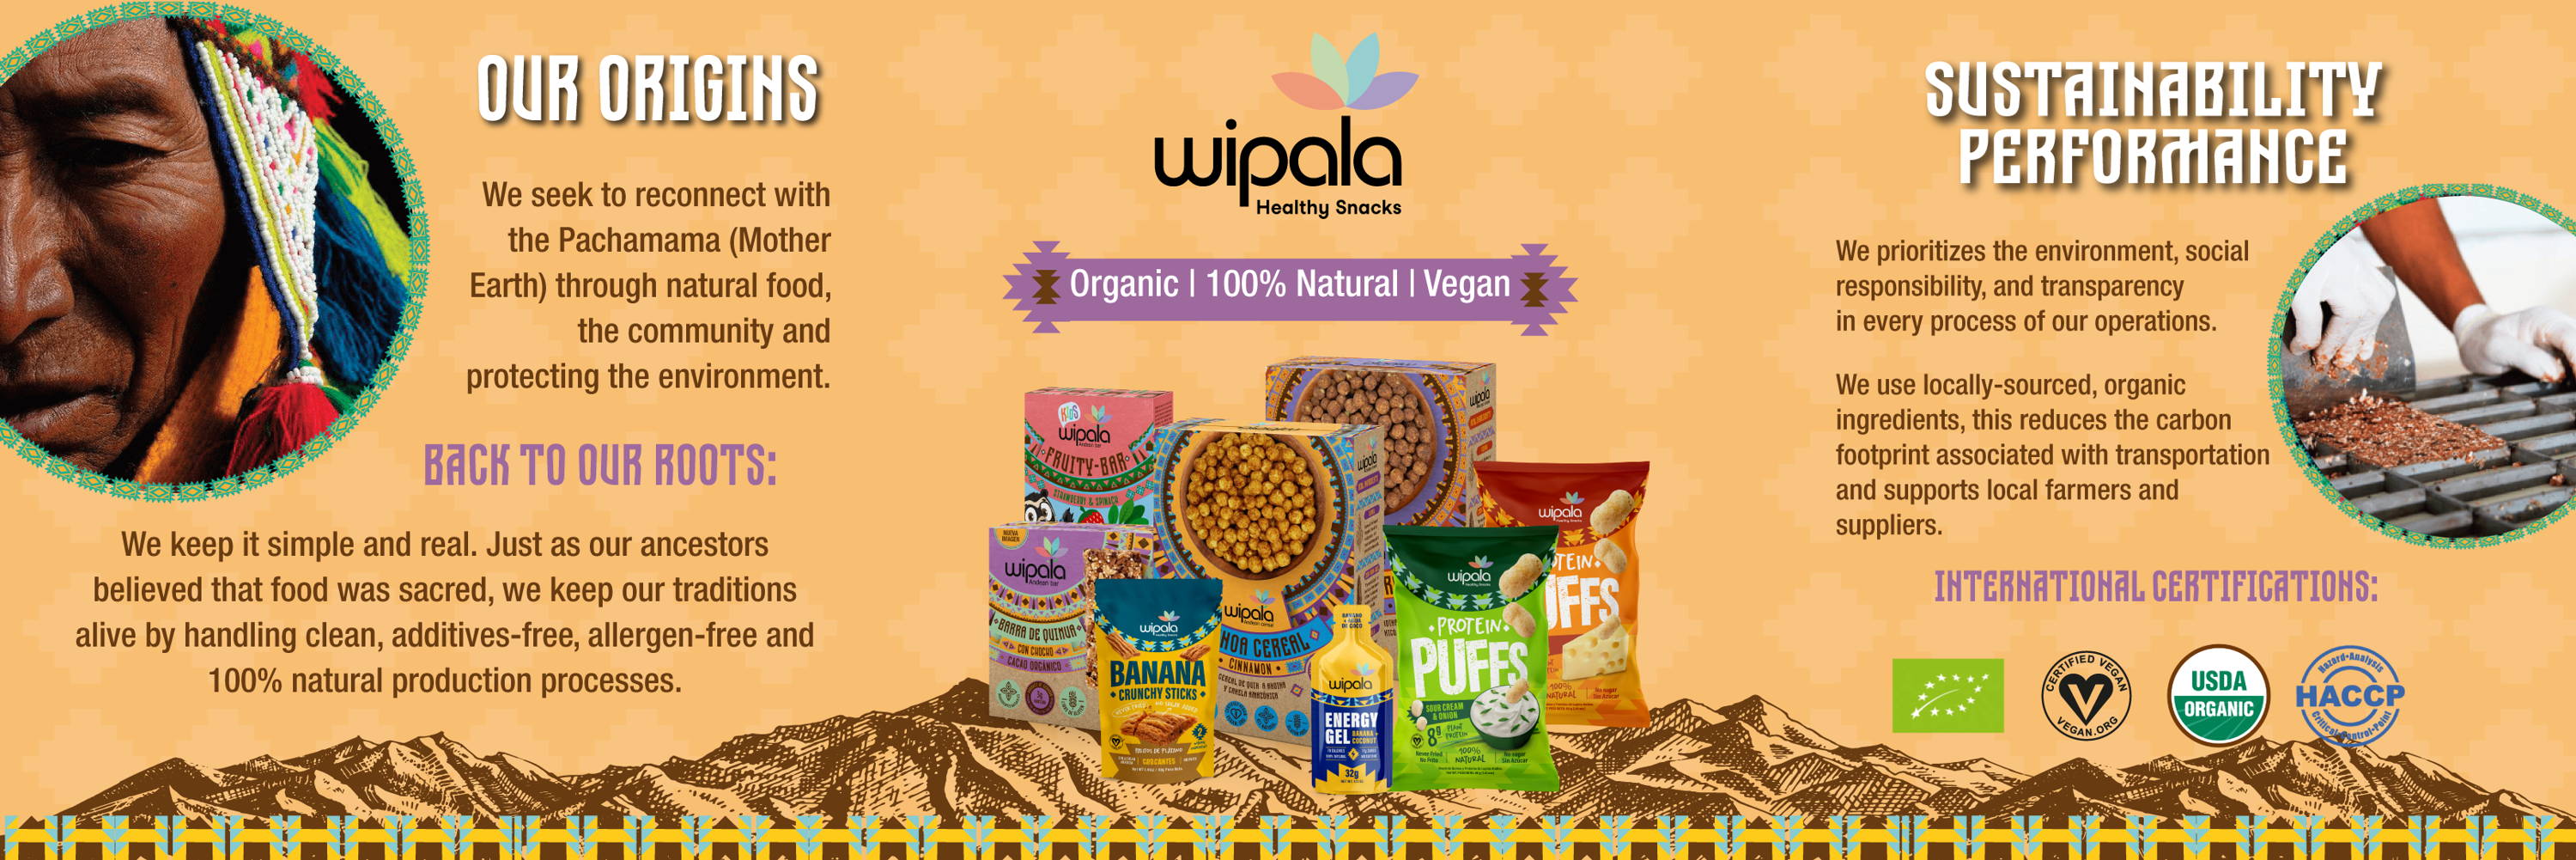 Wipala Healthy Snacks Origins Organic Vegan Sustainability